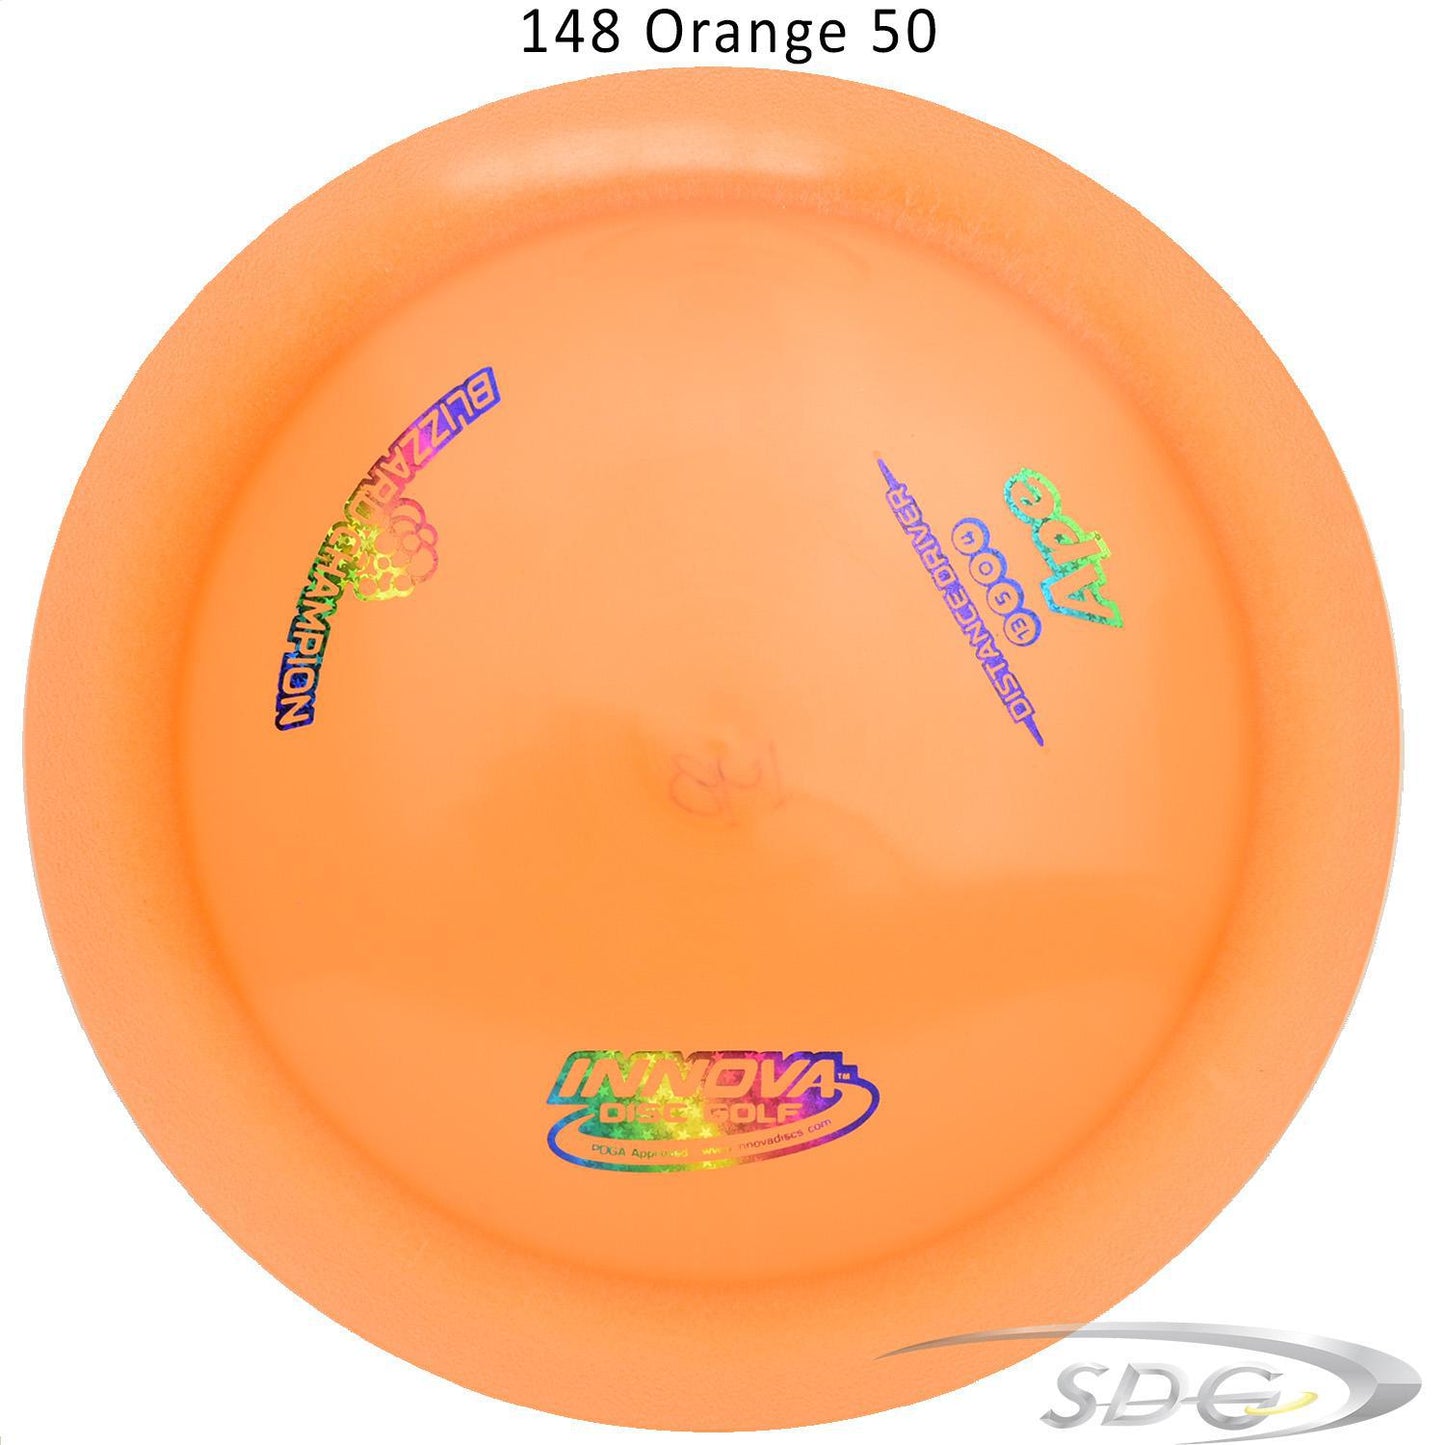 innova-blizzard-champion-ape-disc-golf-distance-driver 148 Orange 50 